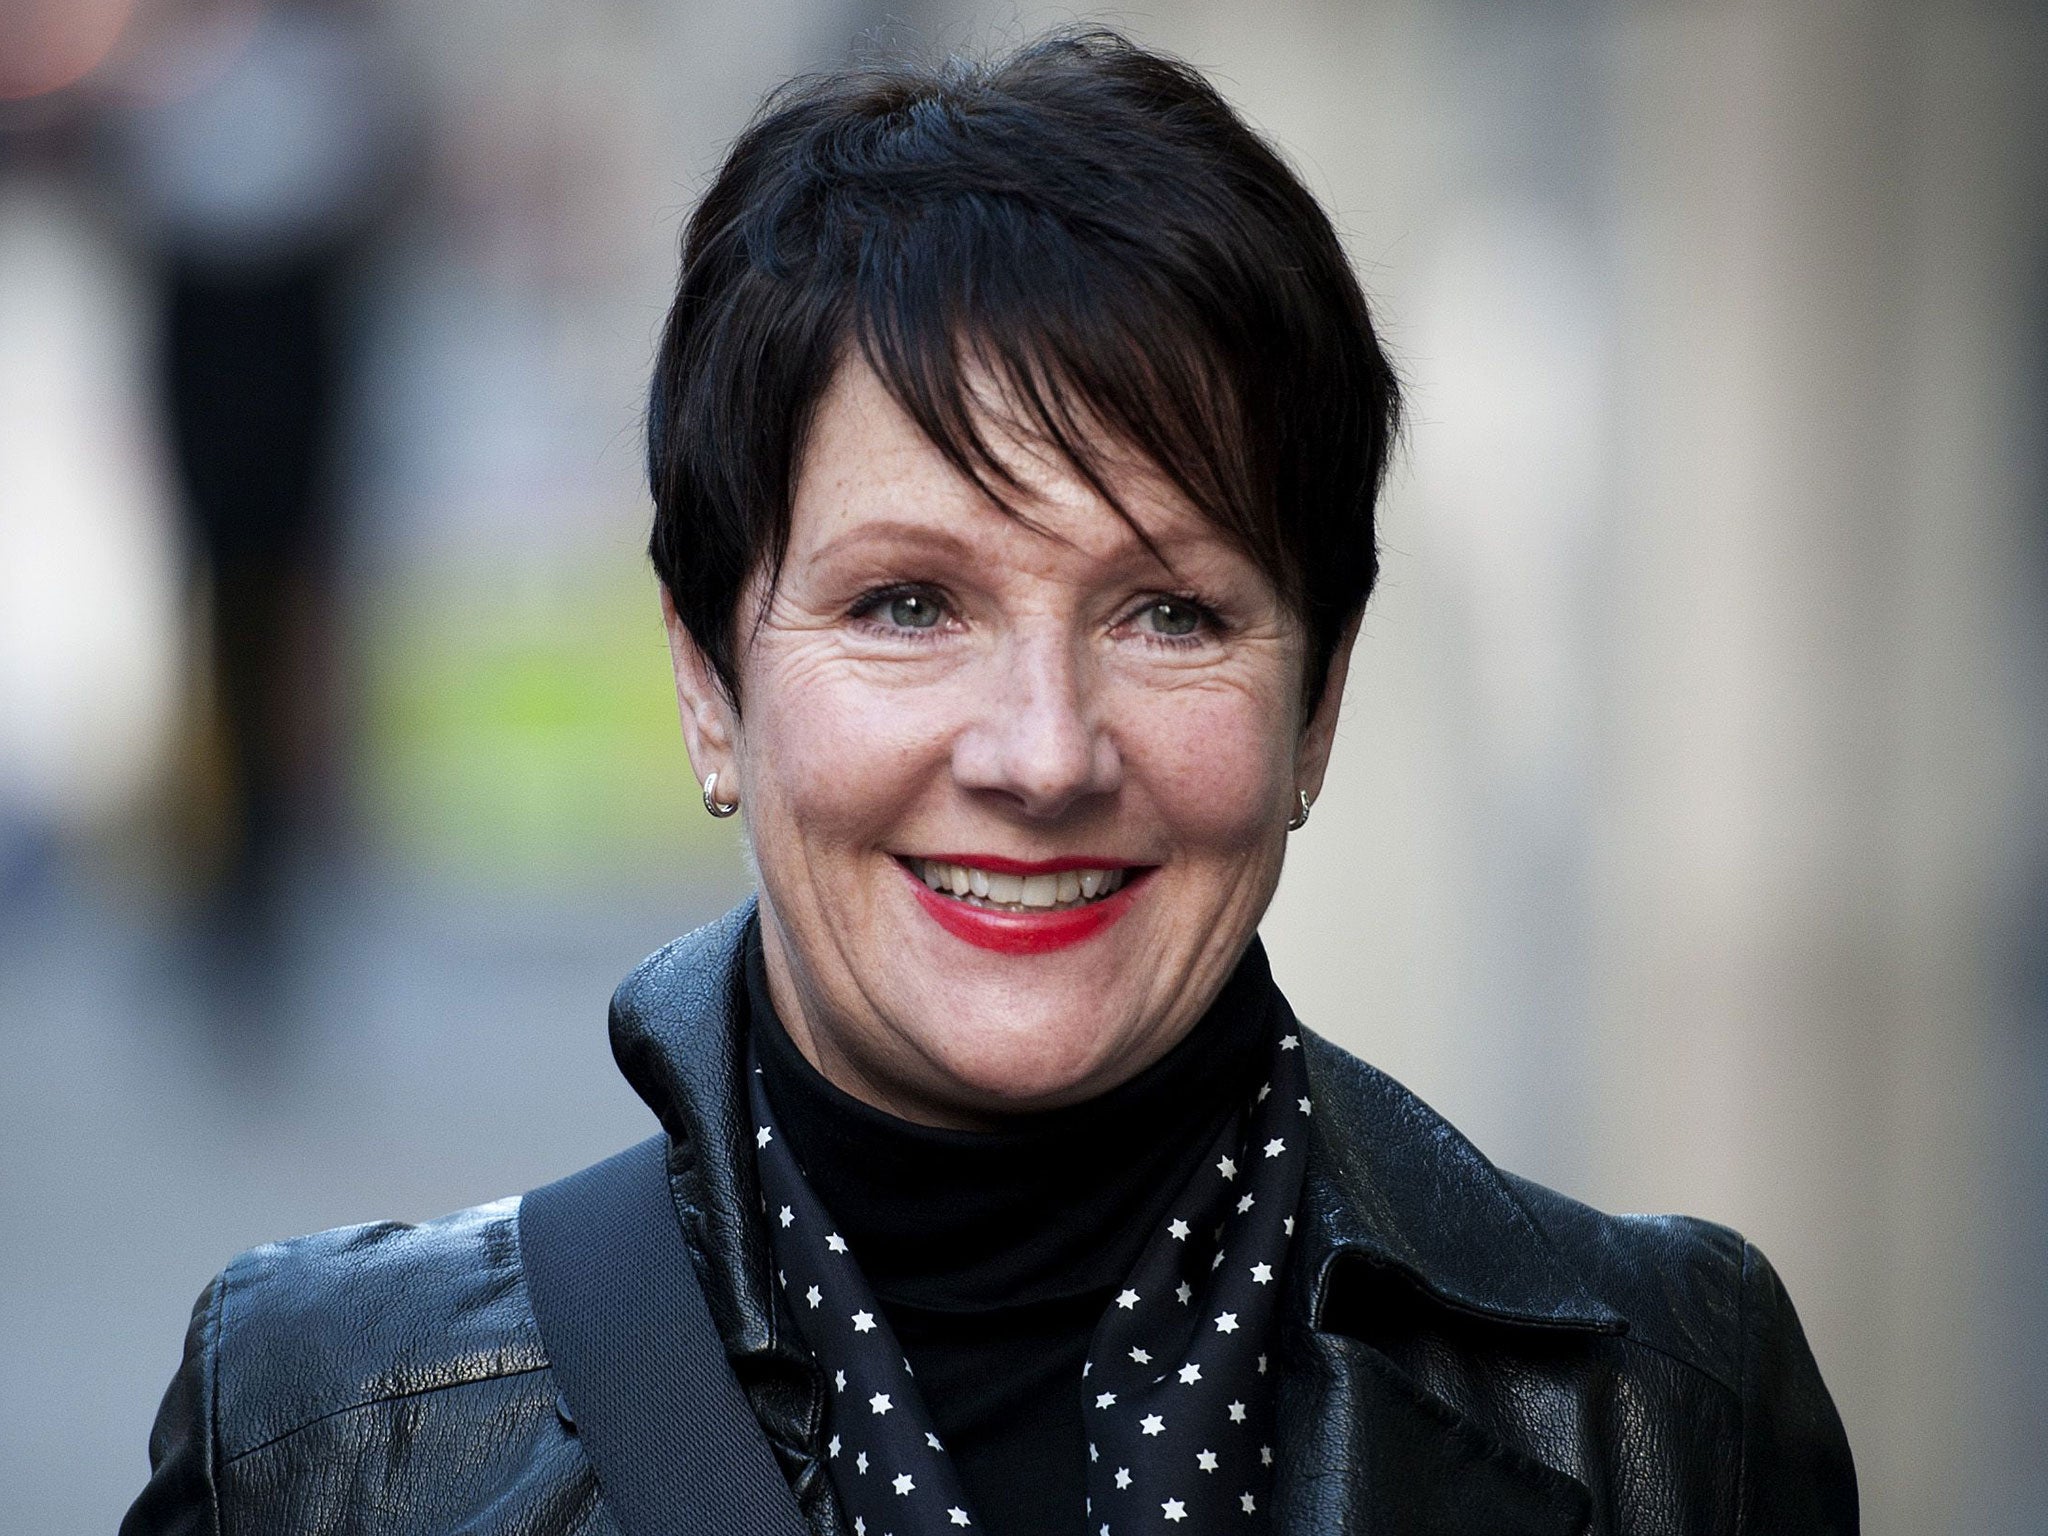 Miriam O’Reilly won an age discrimination case in 2011